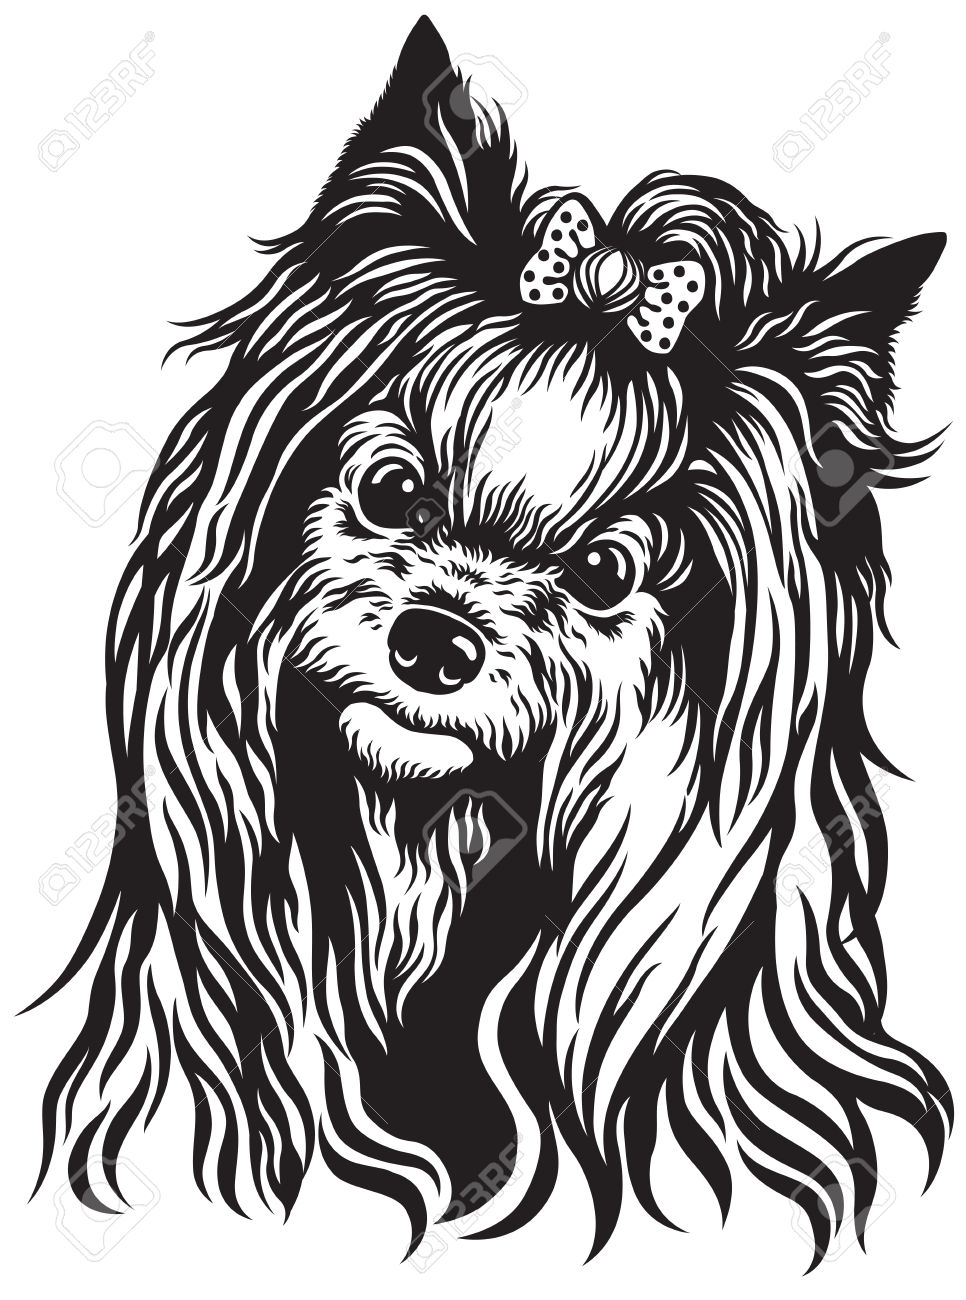 Yrokshire Terrier clipart #8, Download drawings